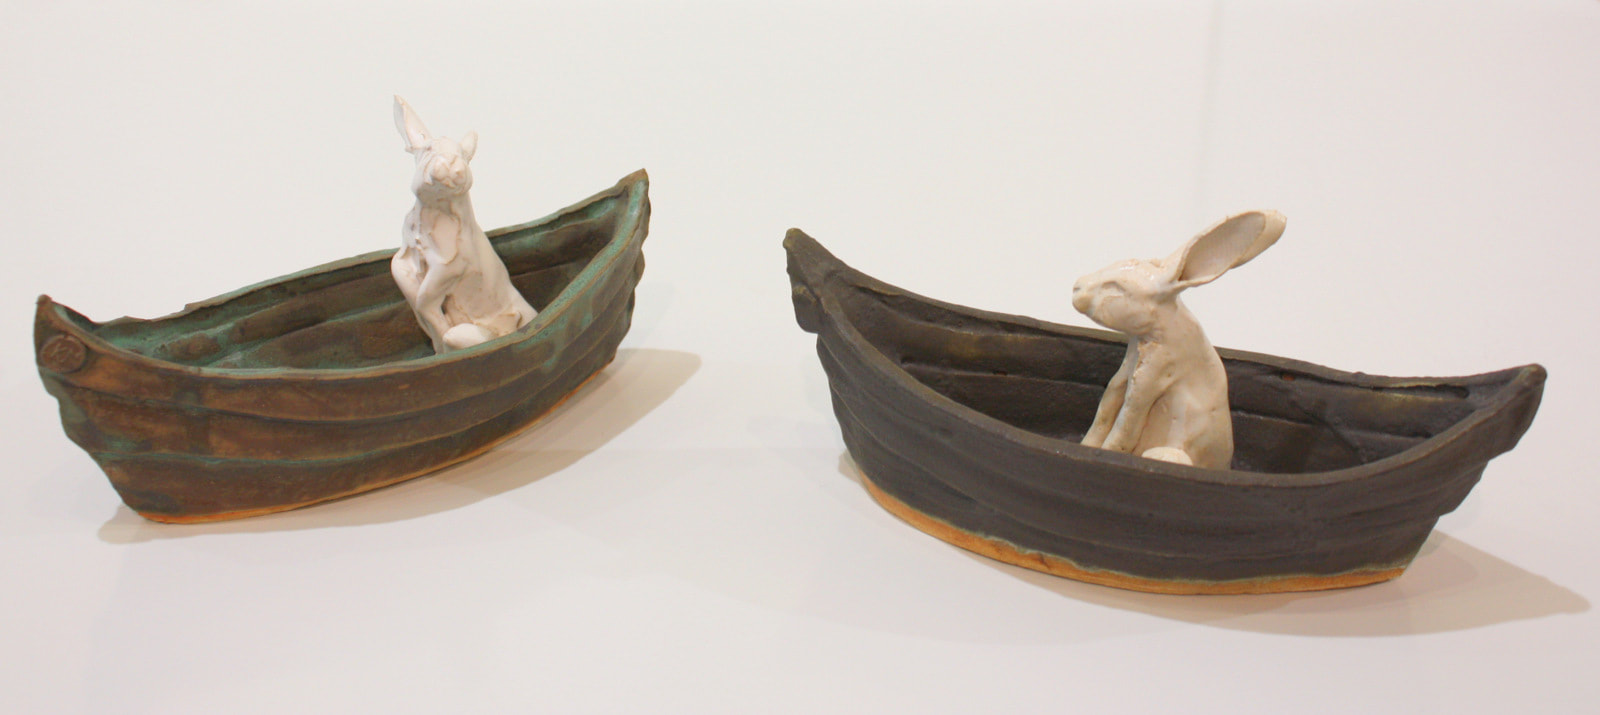 Kylie Matheson- "Drifters", Ceramic Sculptures, 17 x 8 x 7cm, 2021